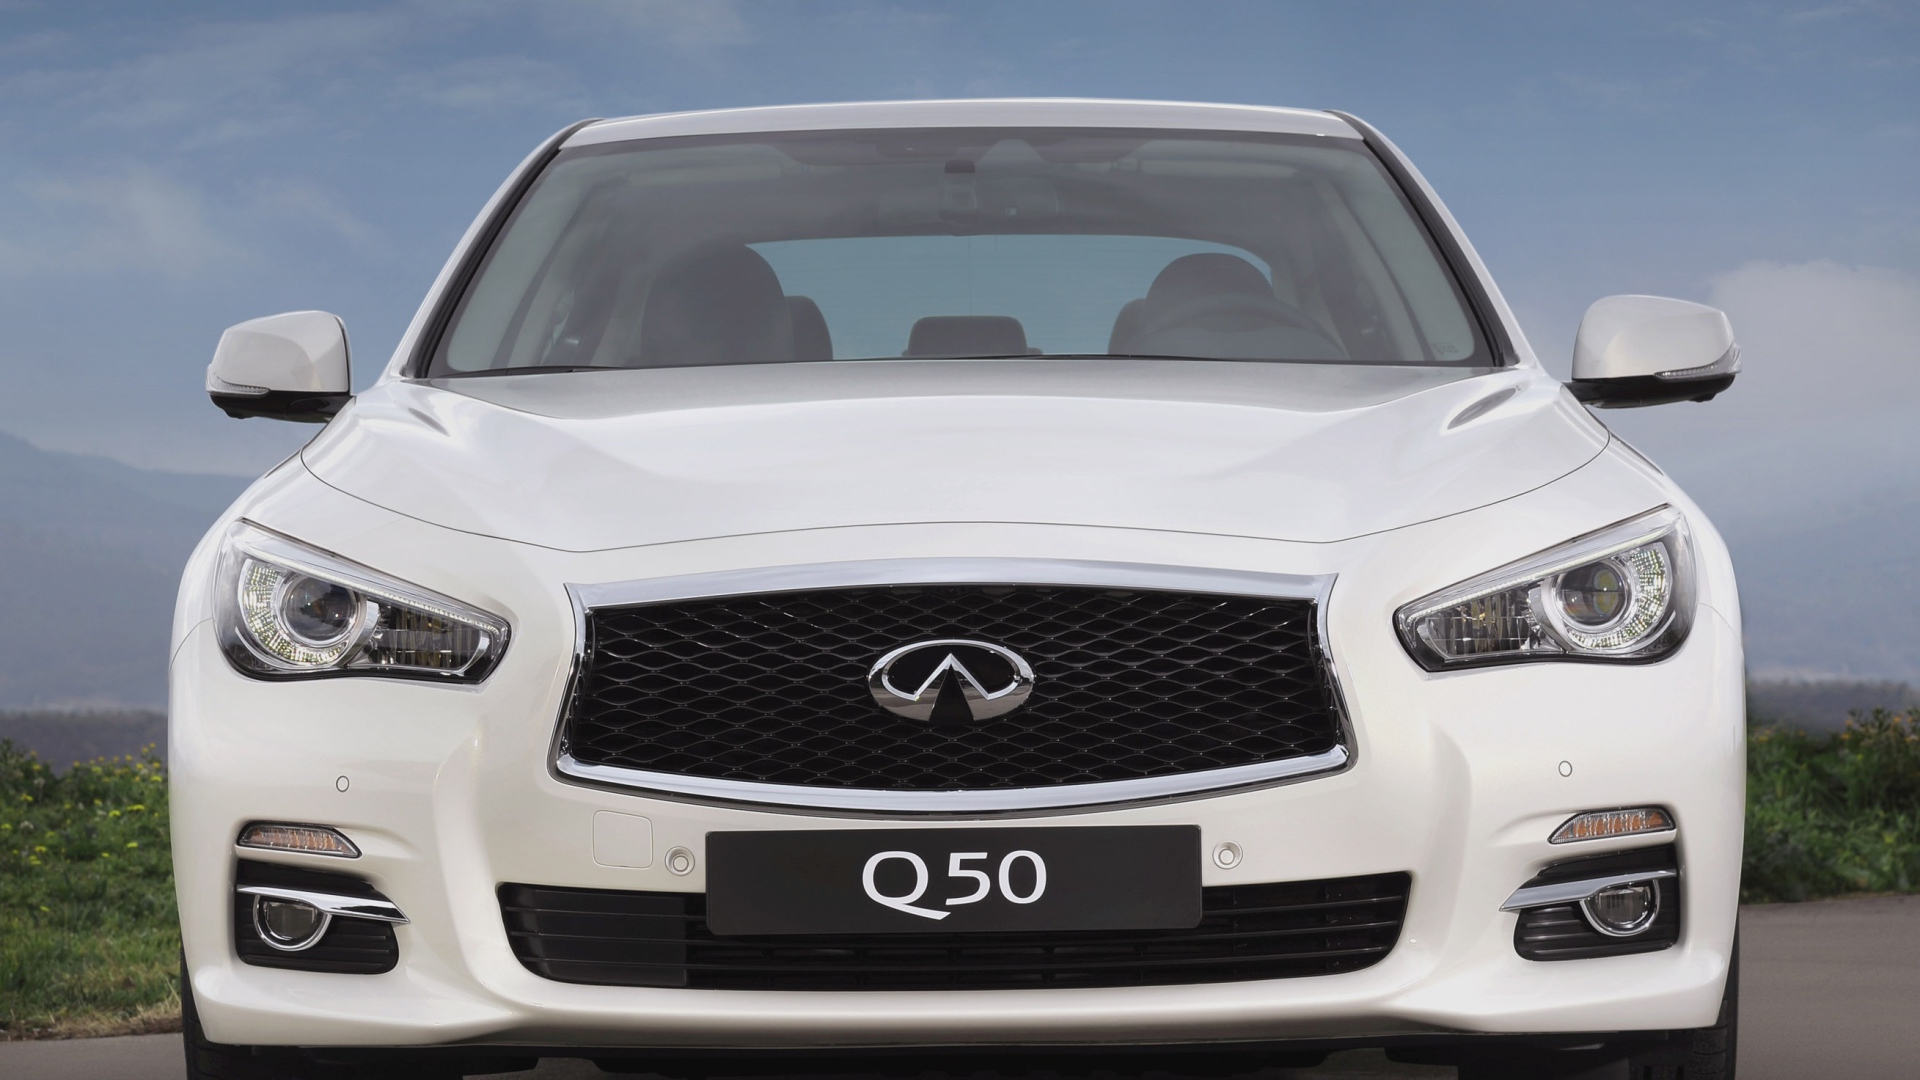 Тест драйв автомобиля Infiniti Q50 2014 года